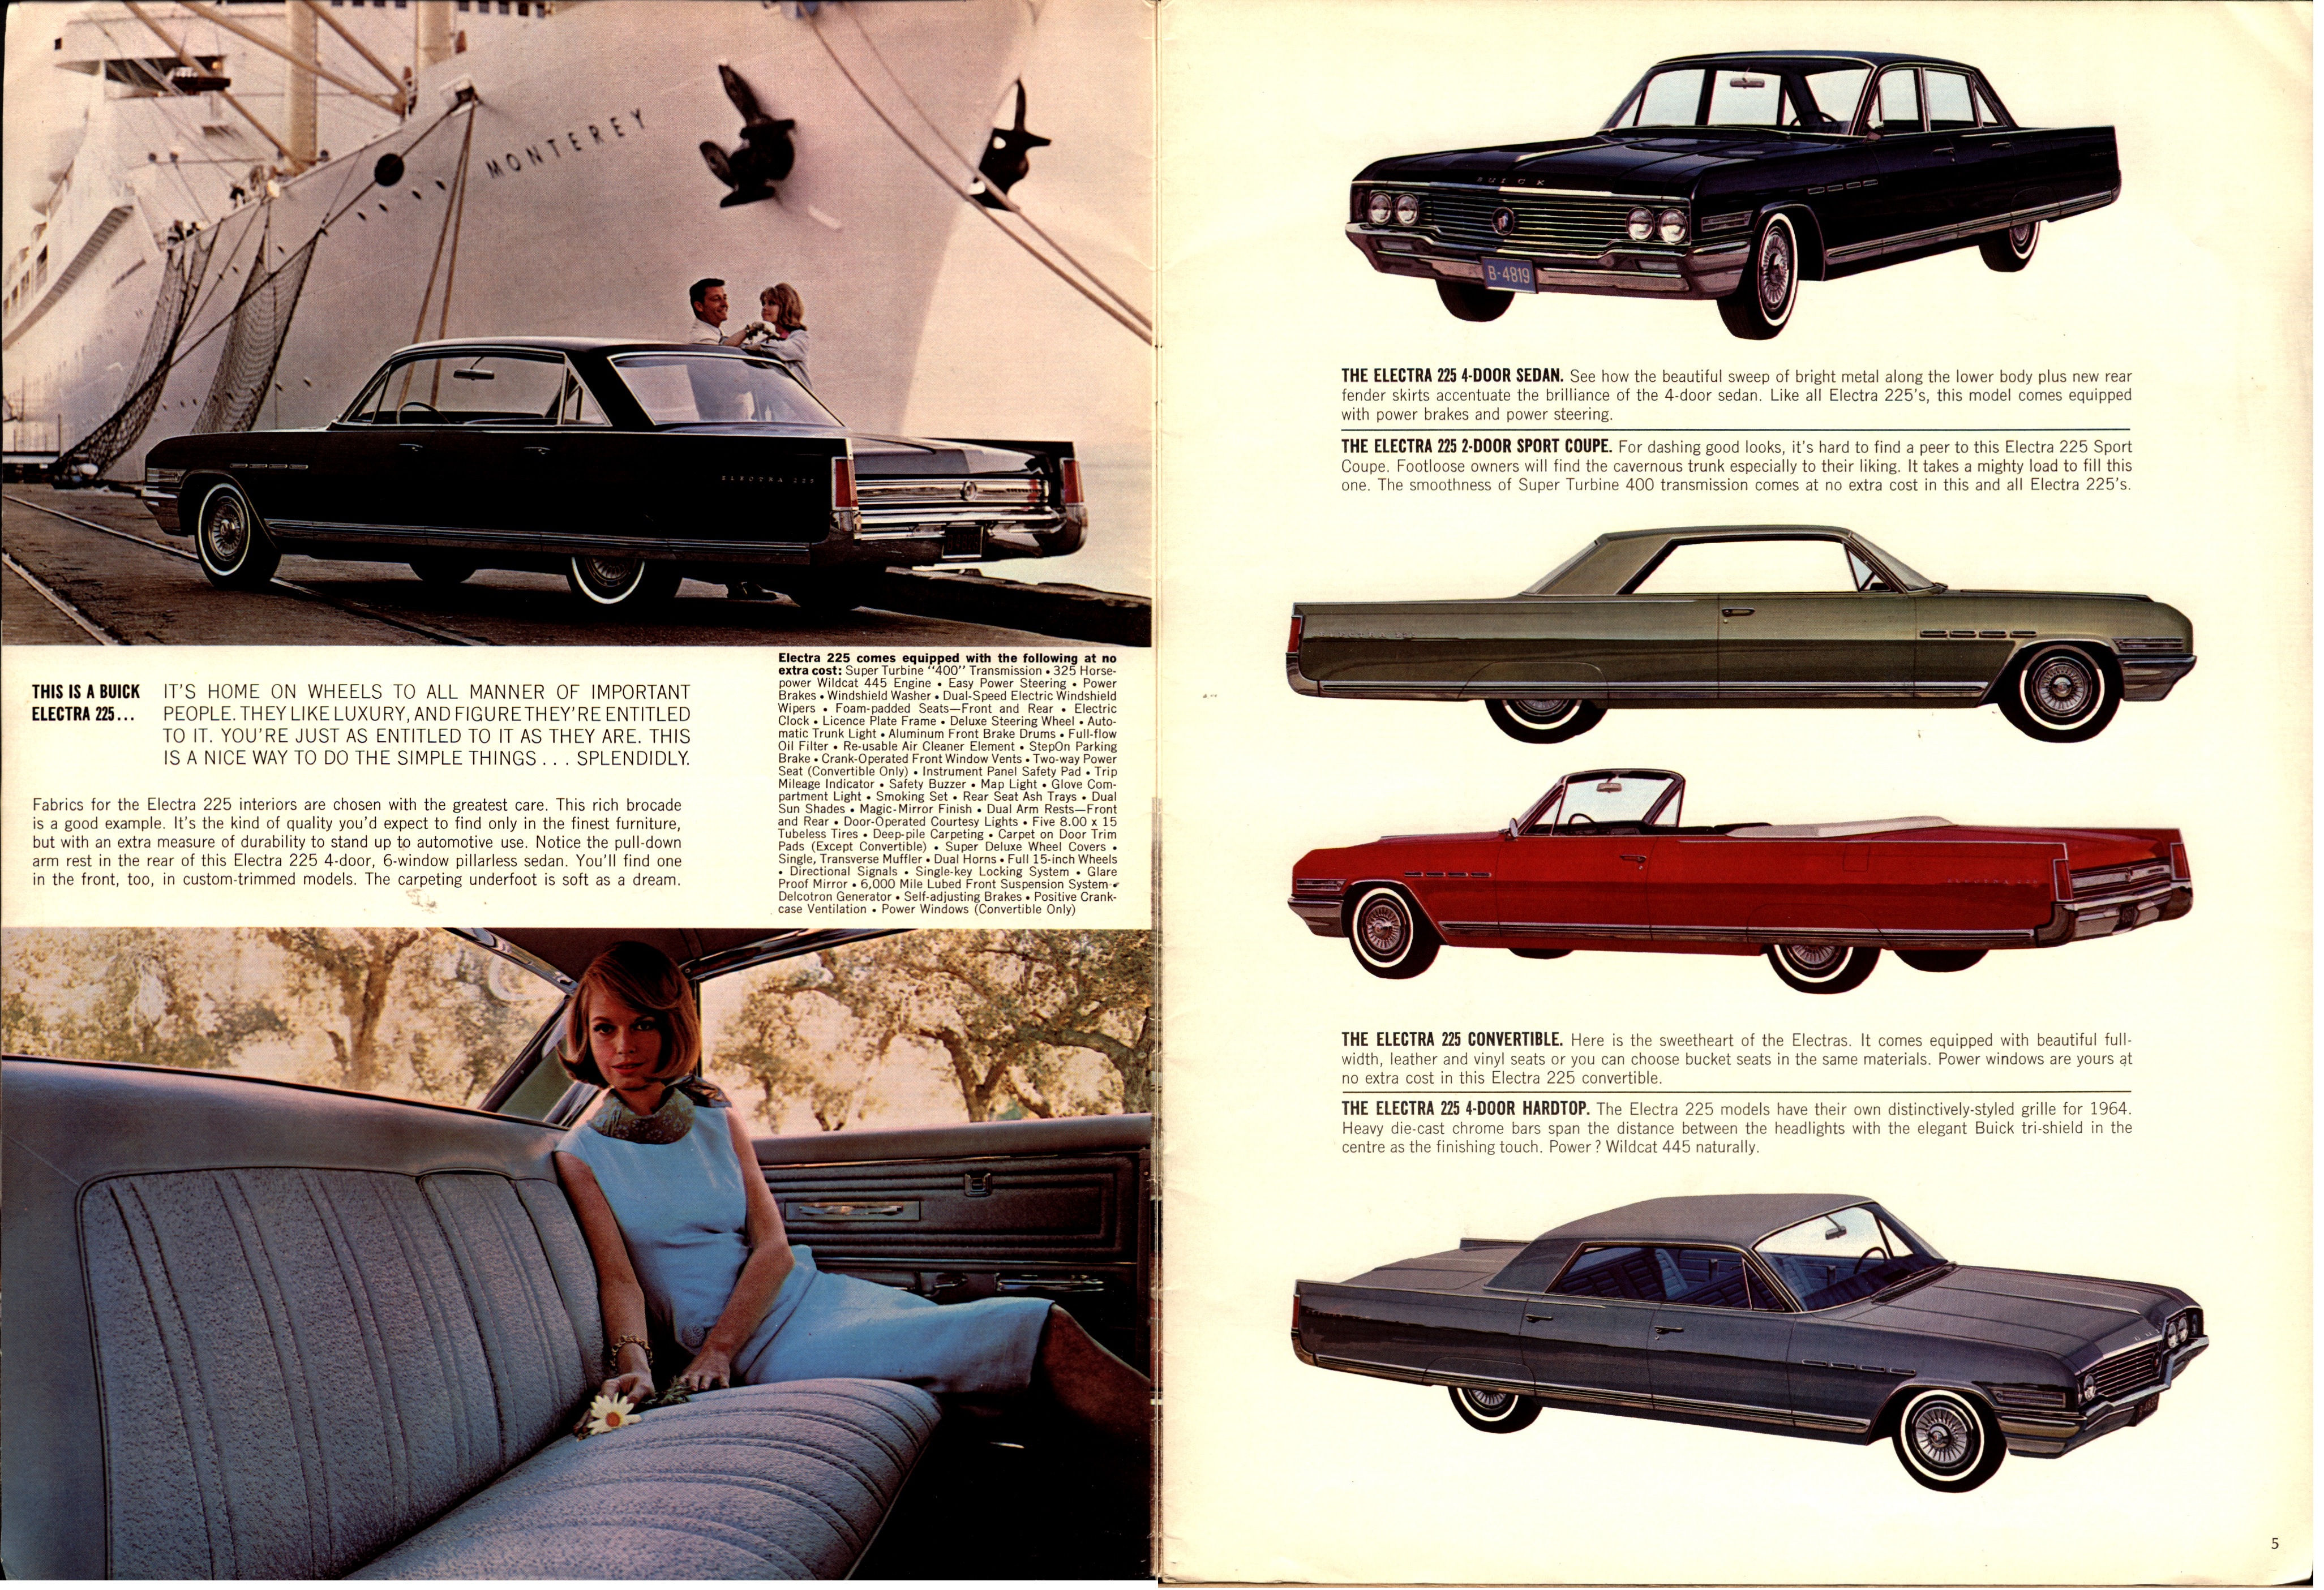 1964 Buick Full Size Brochure (Cdn) 04-05